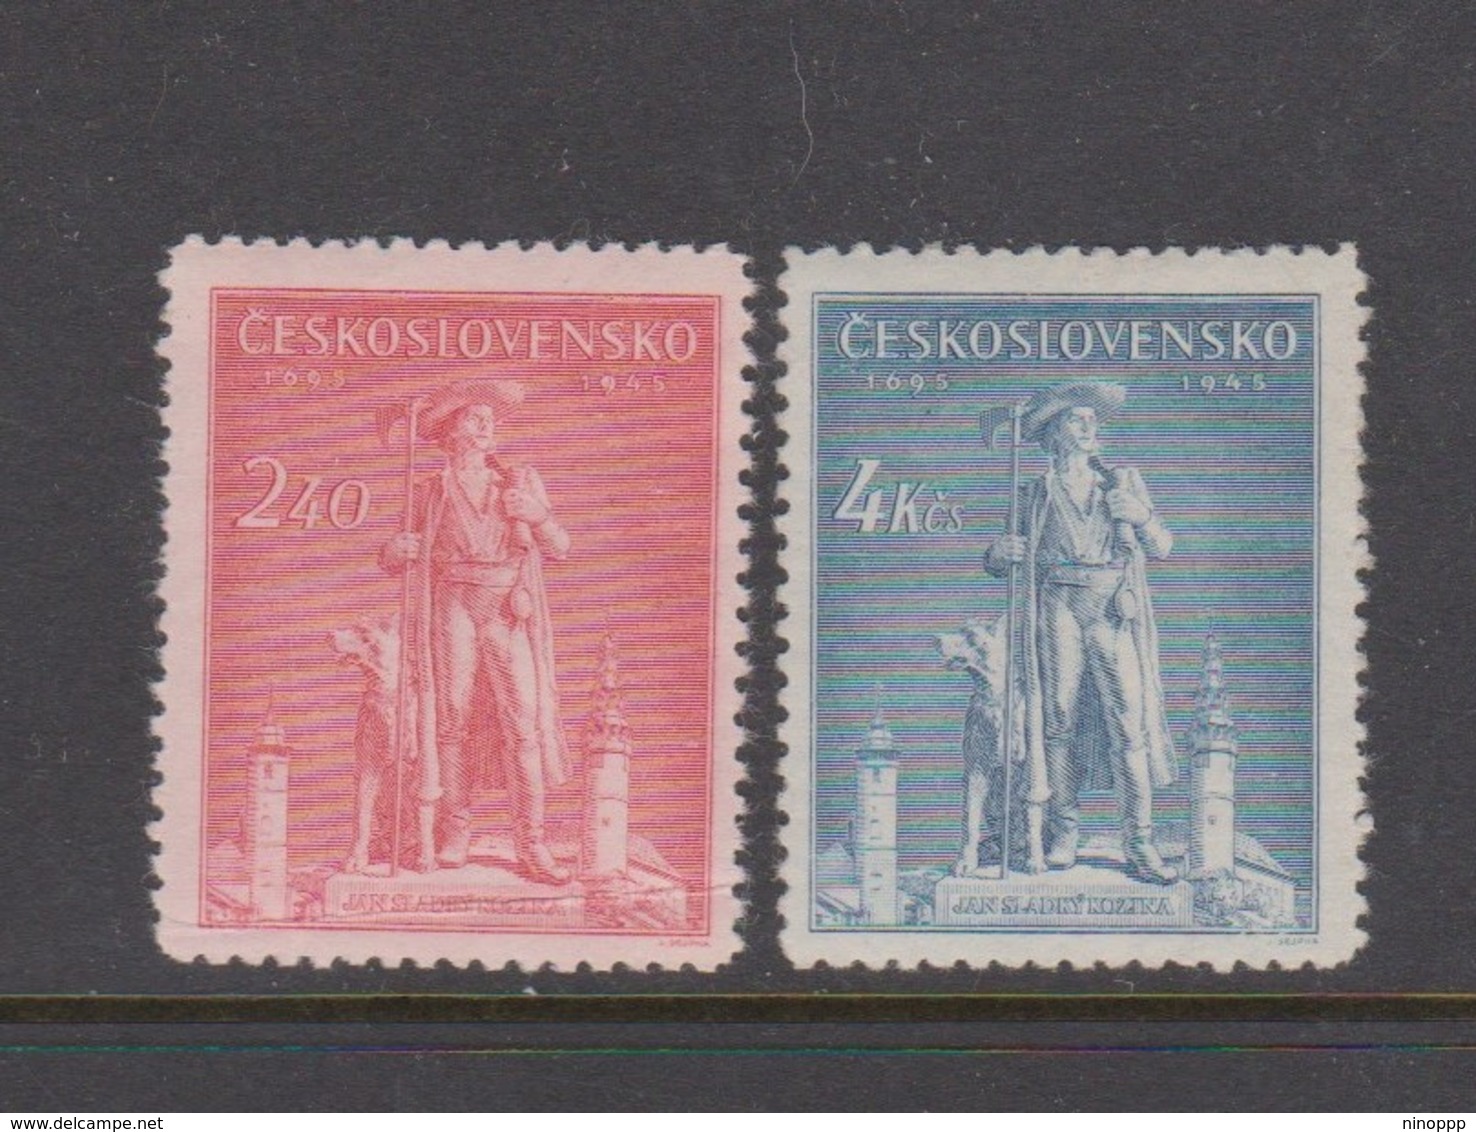 Czechoslovakia Scott 305-306 1945 250th Death Anniversary Of Jan Sladky, Mint Hinged - Unused Stamps